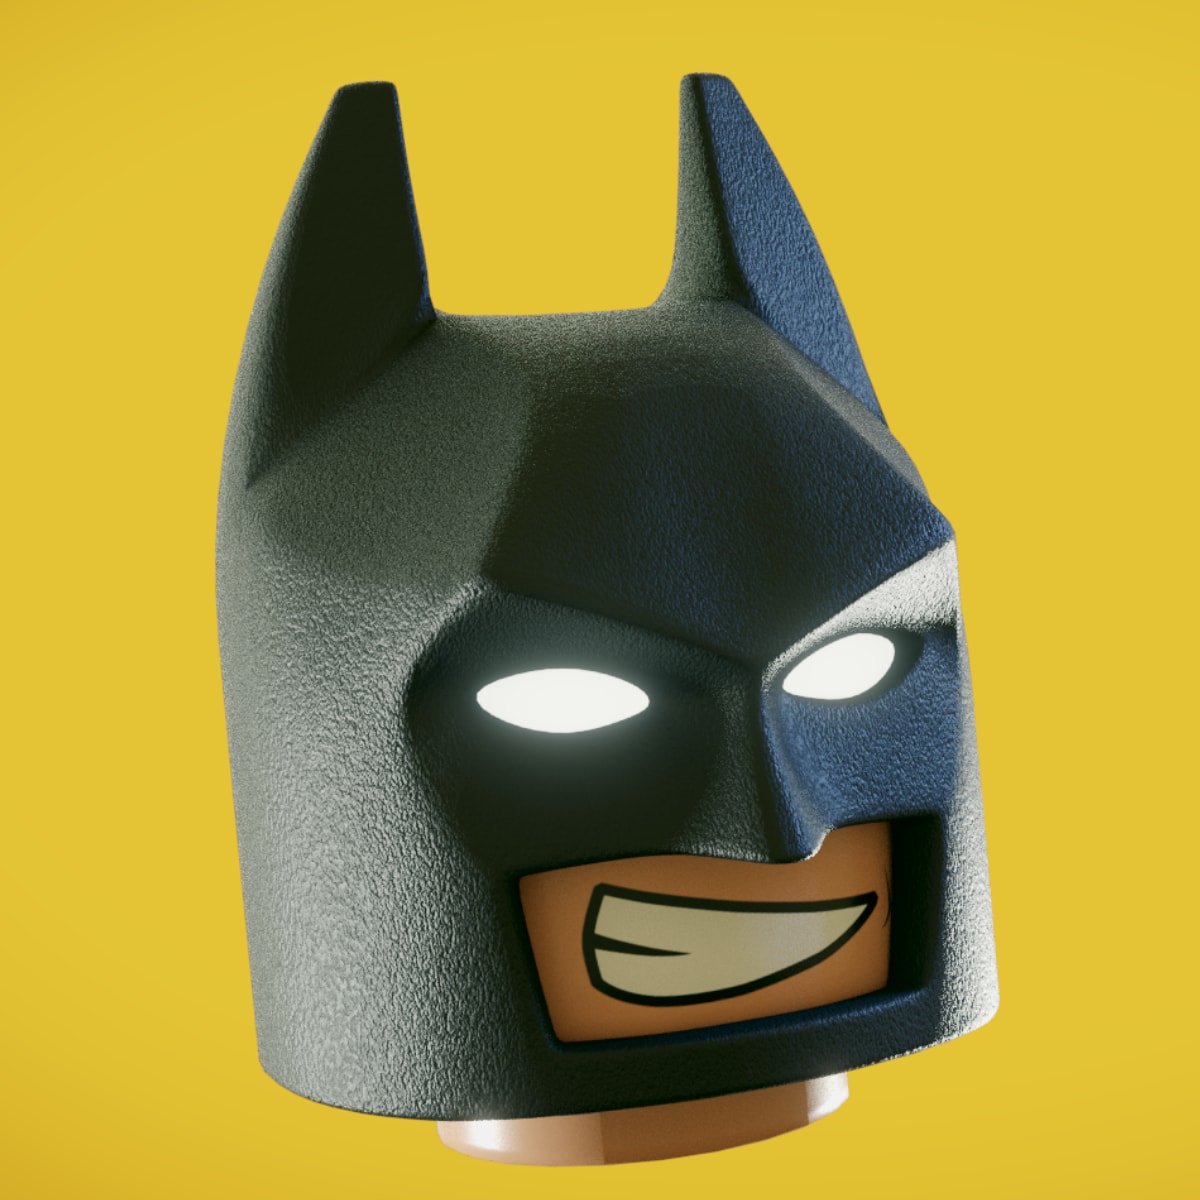 Lego Batman | Domestika